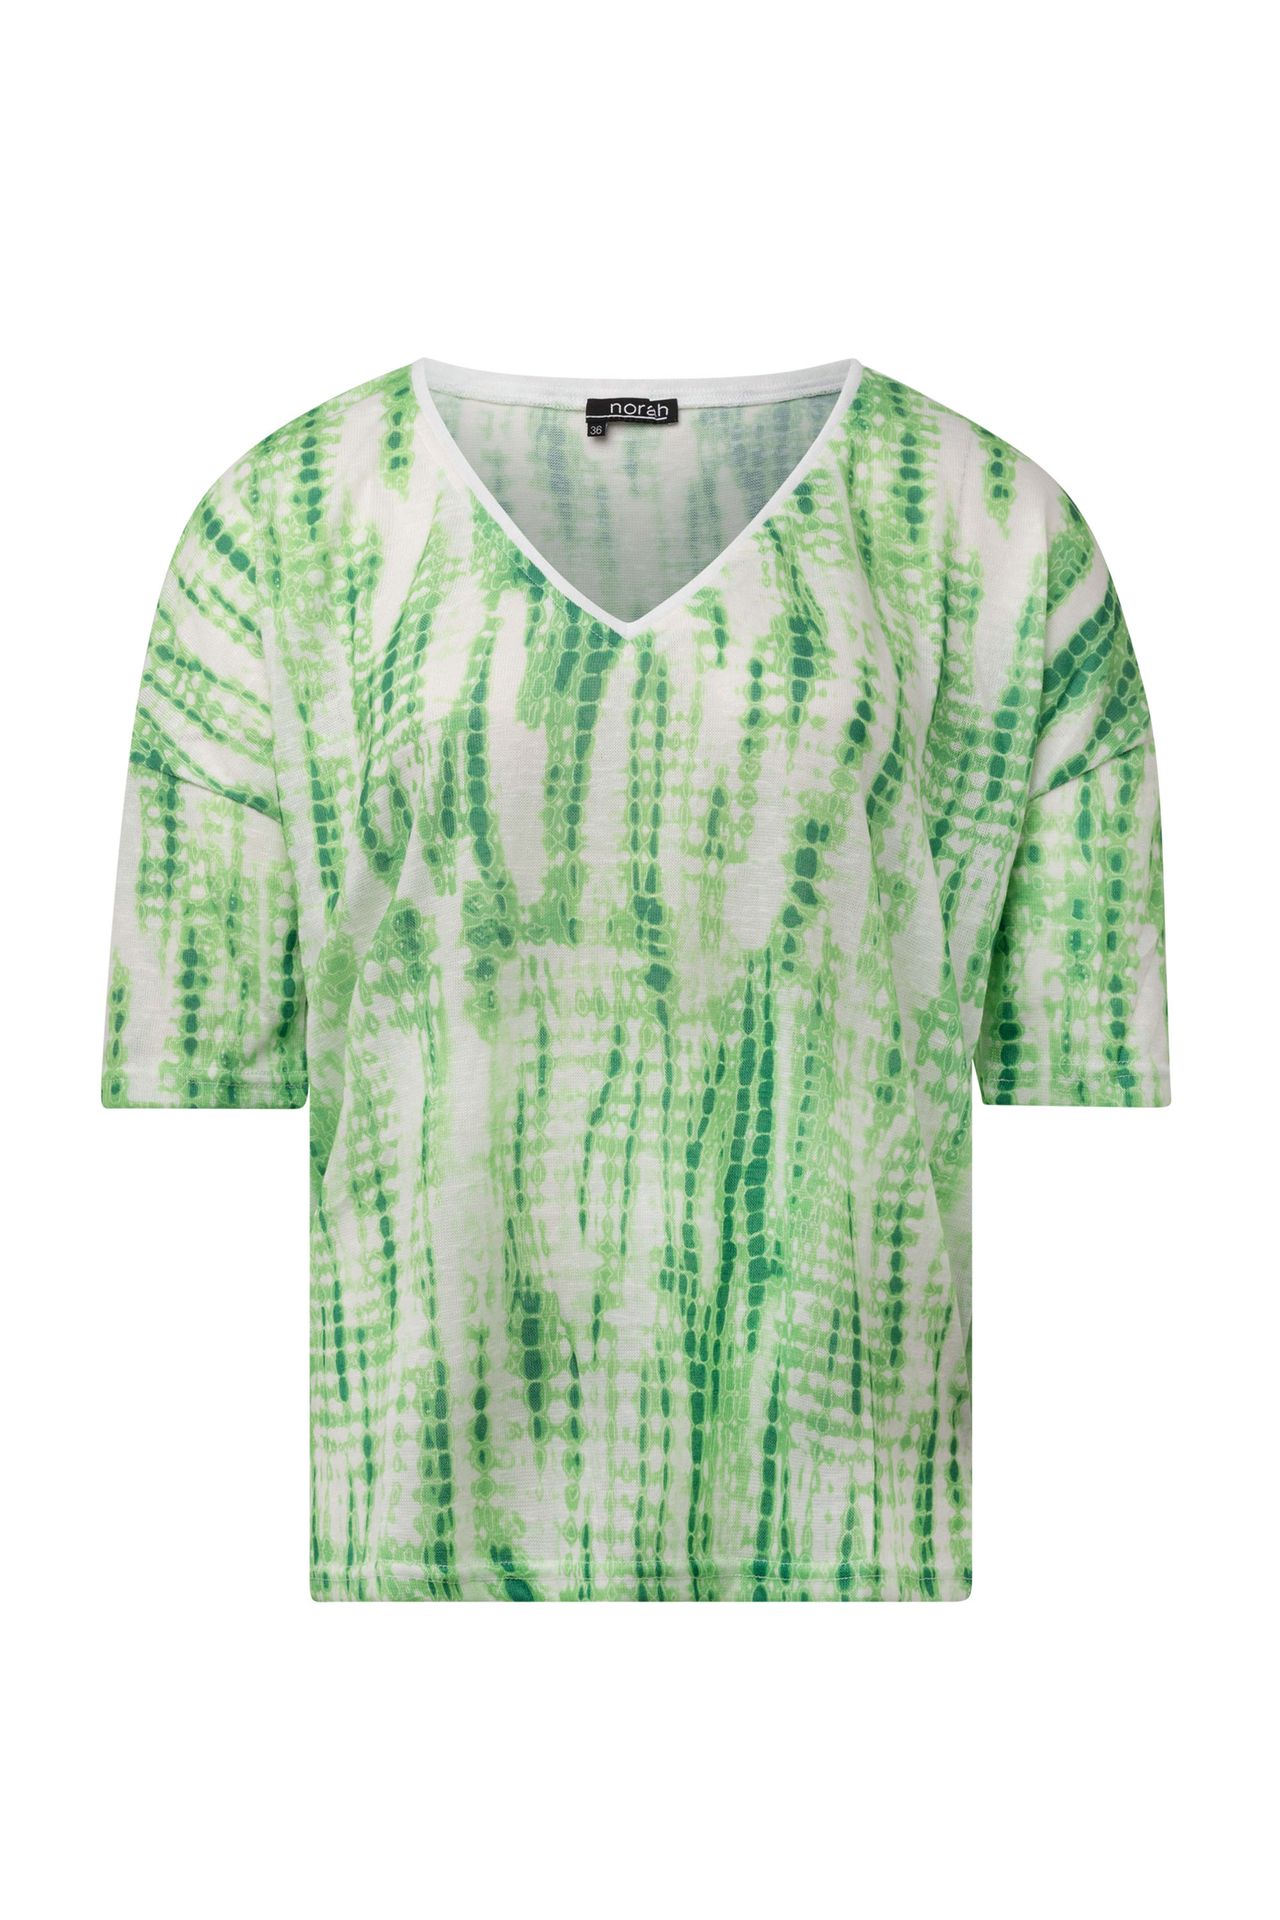 Norah Groen shirt green/white 214467-531